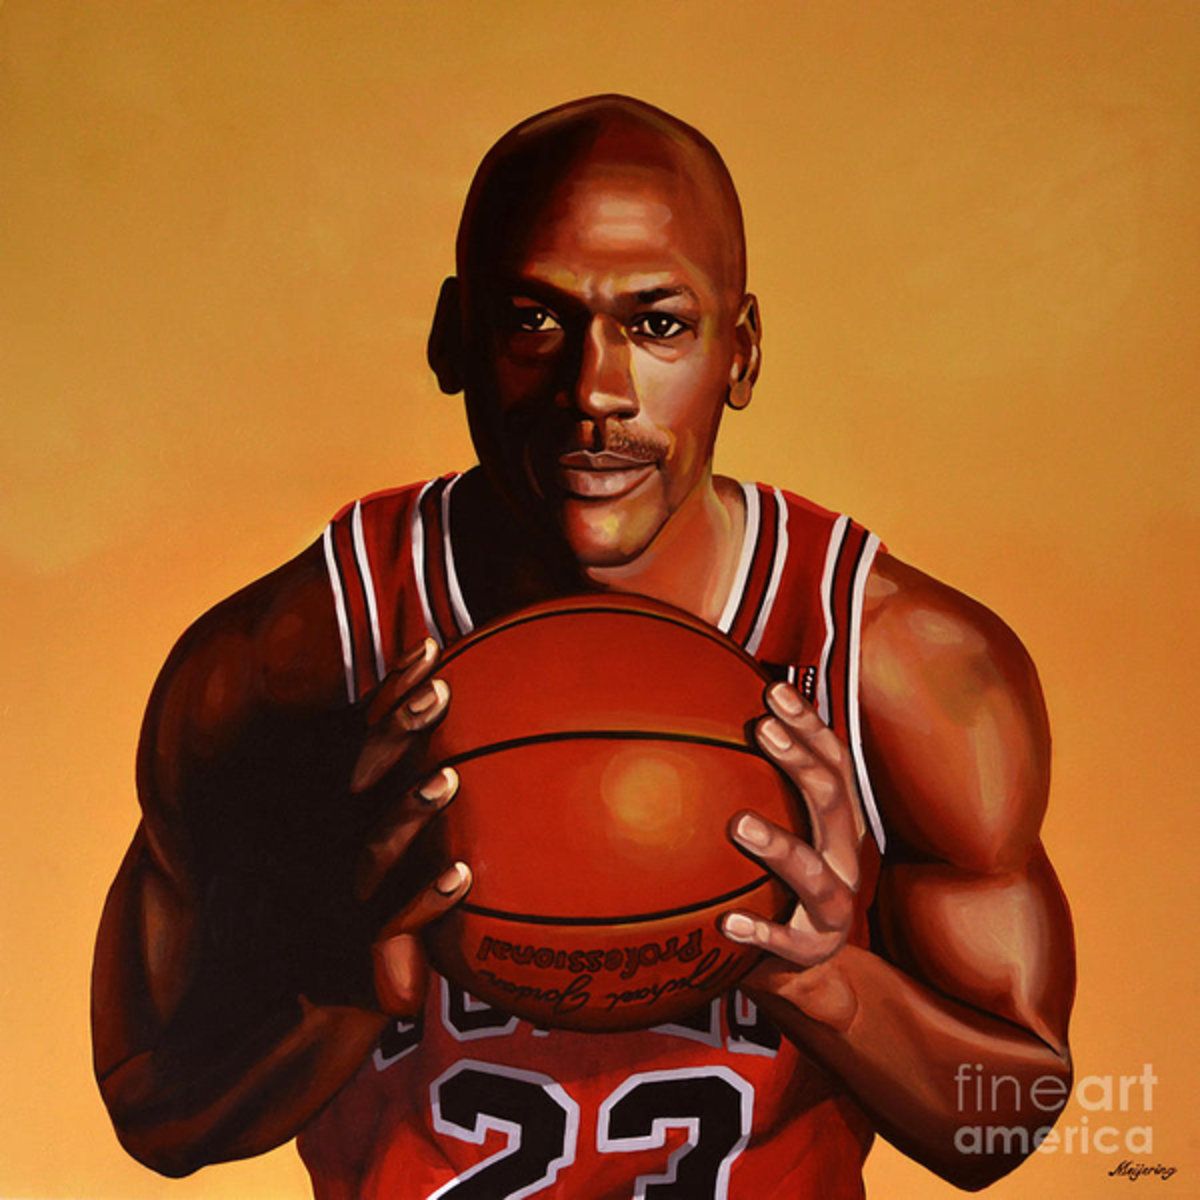 Michael Jordan 2 Poster Canvas Print Wooden Hanging